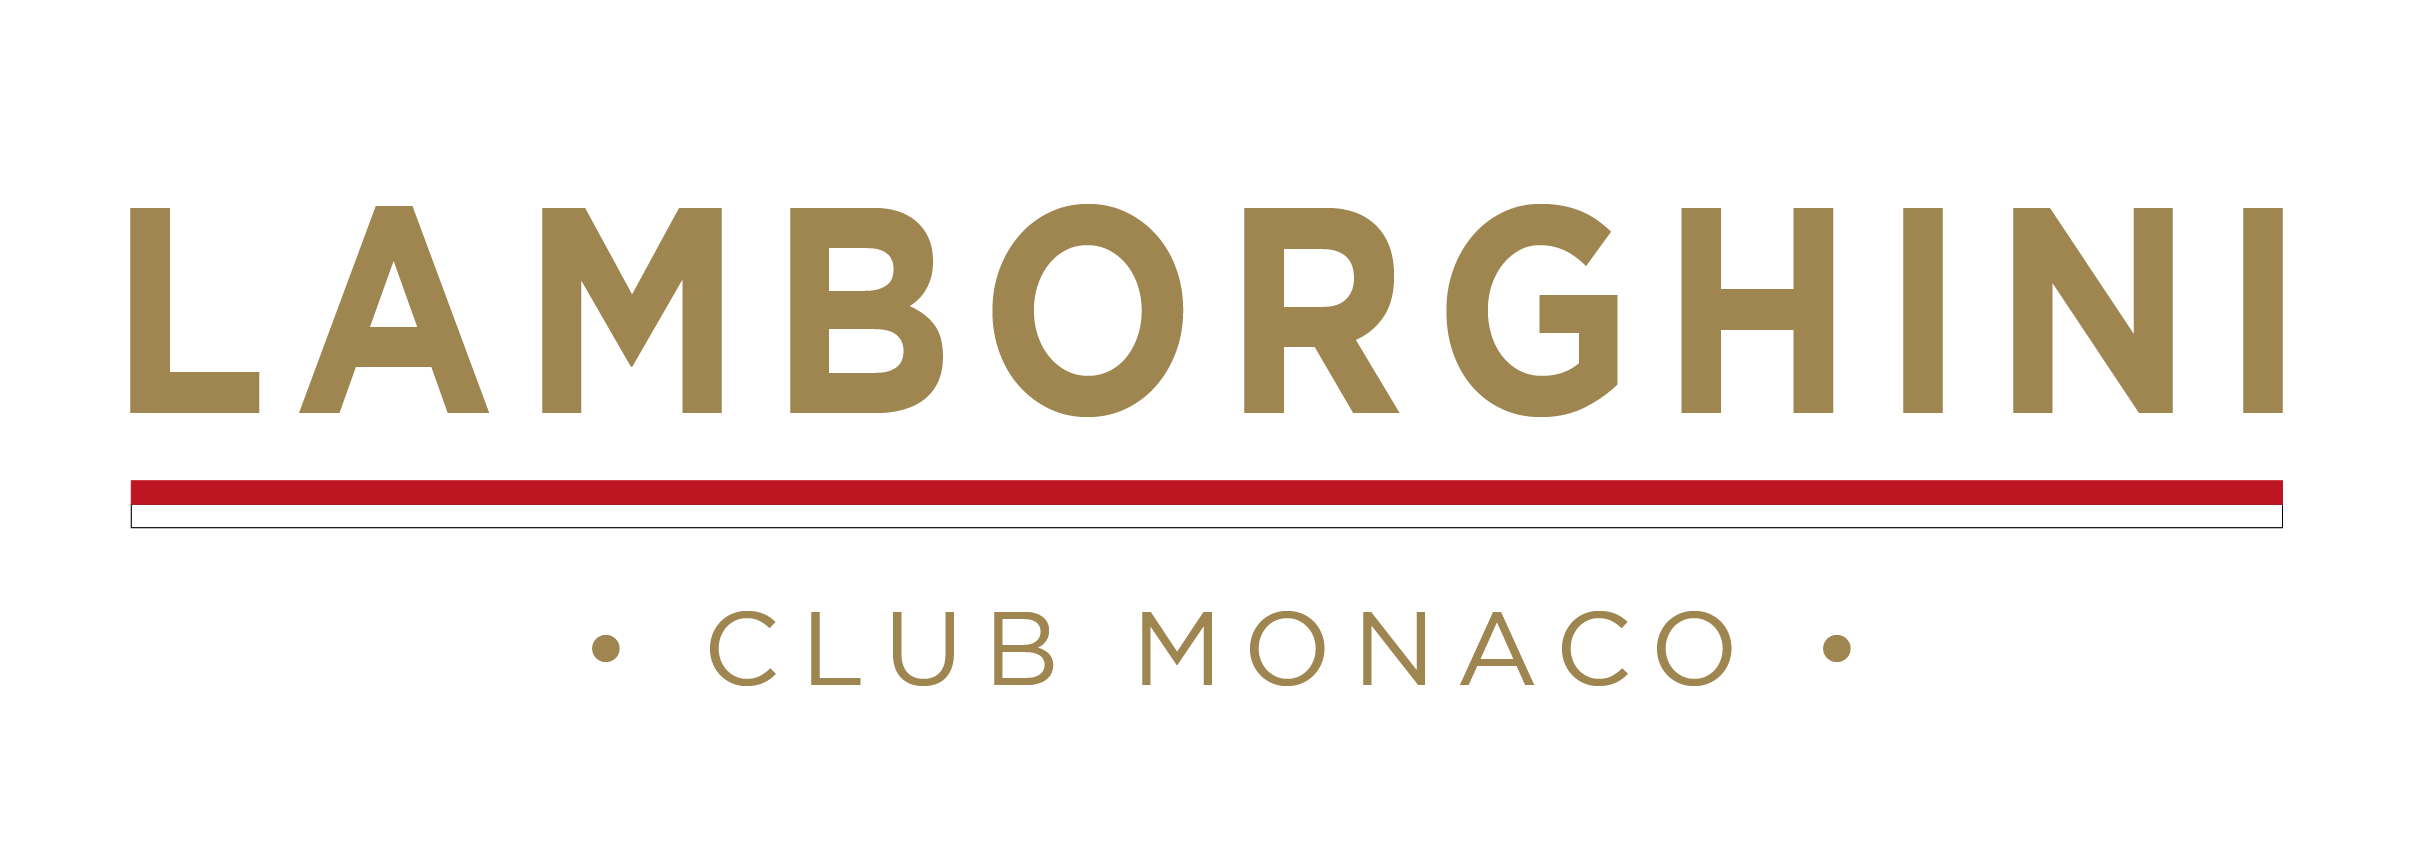 lamborghini club monaco